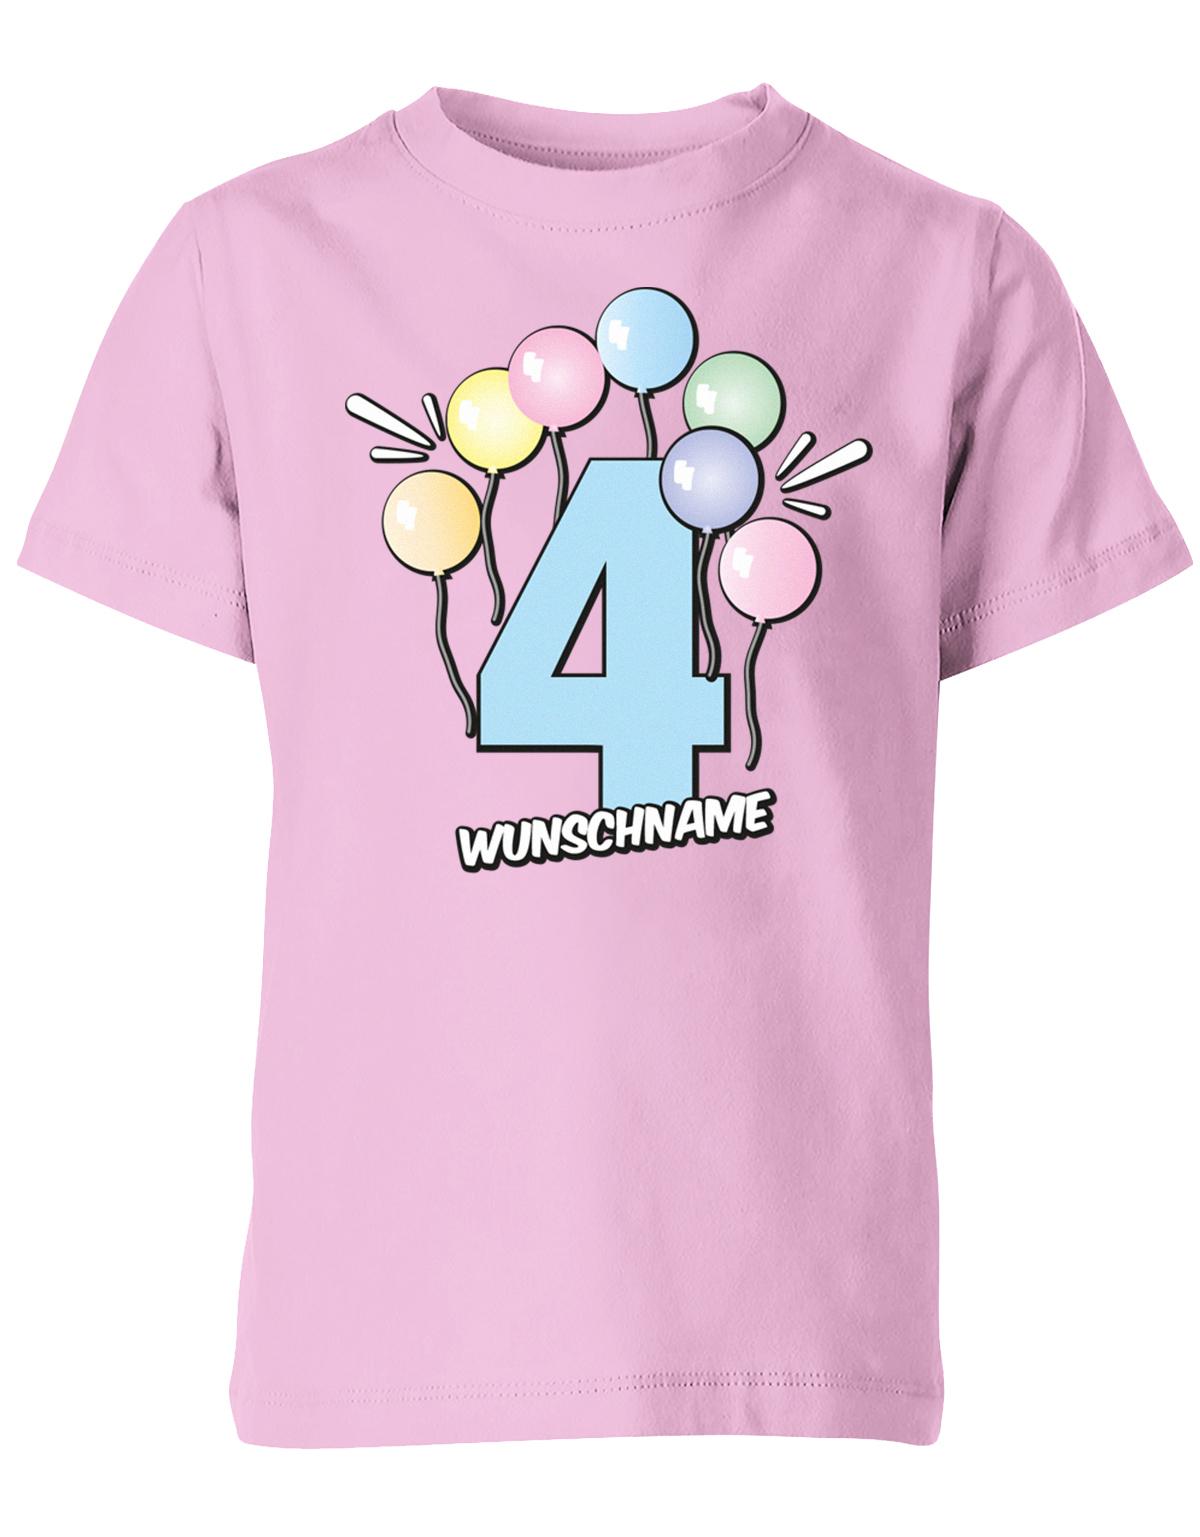 Luftballons-pastell-4-geburtstag-wunschname-kinder-shirt-rosa